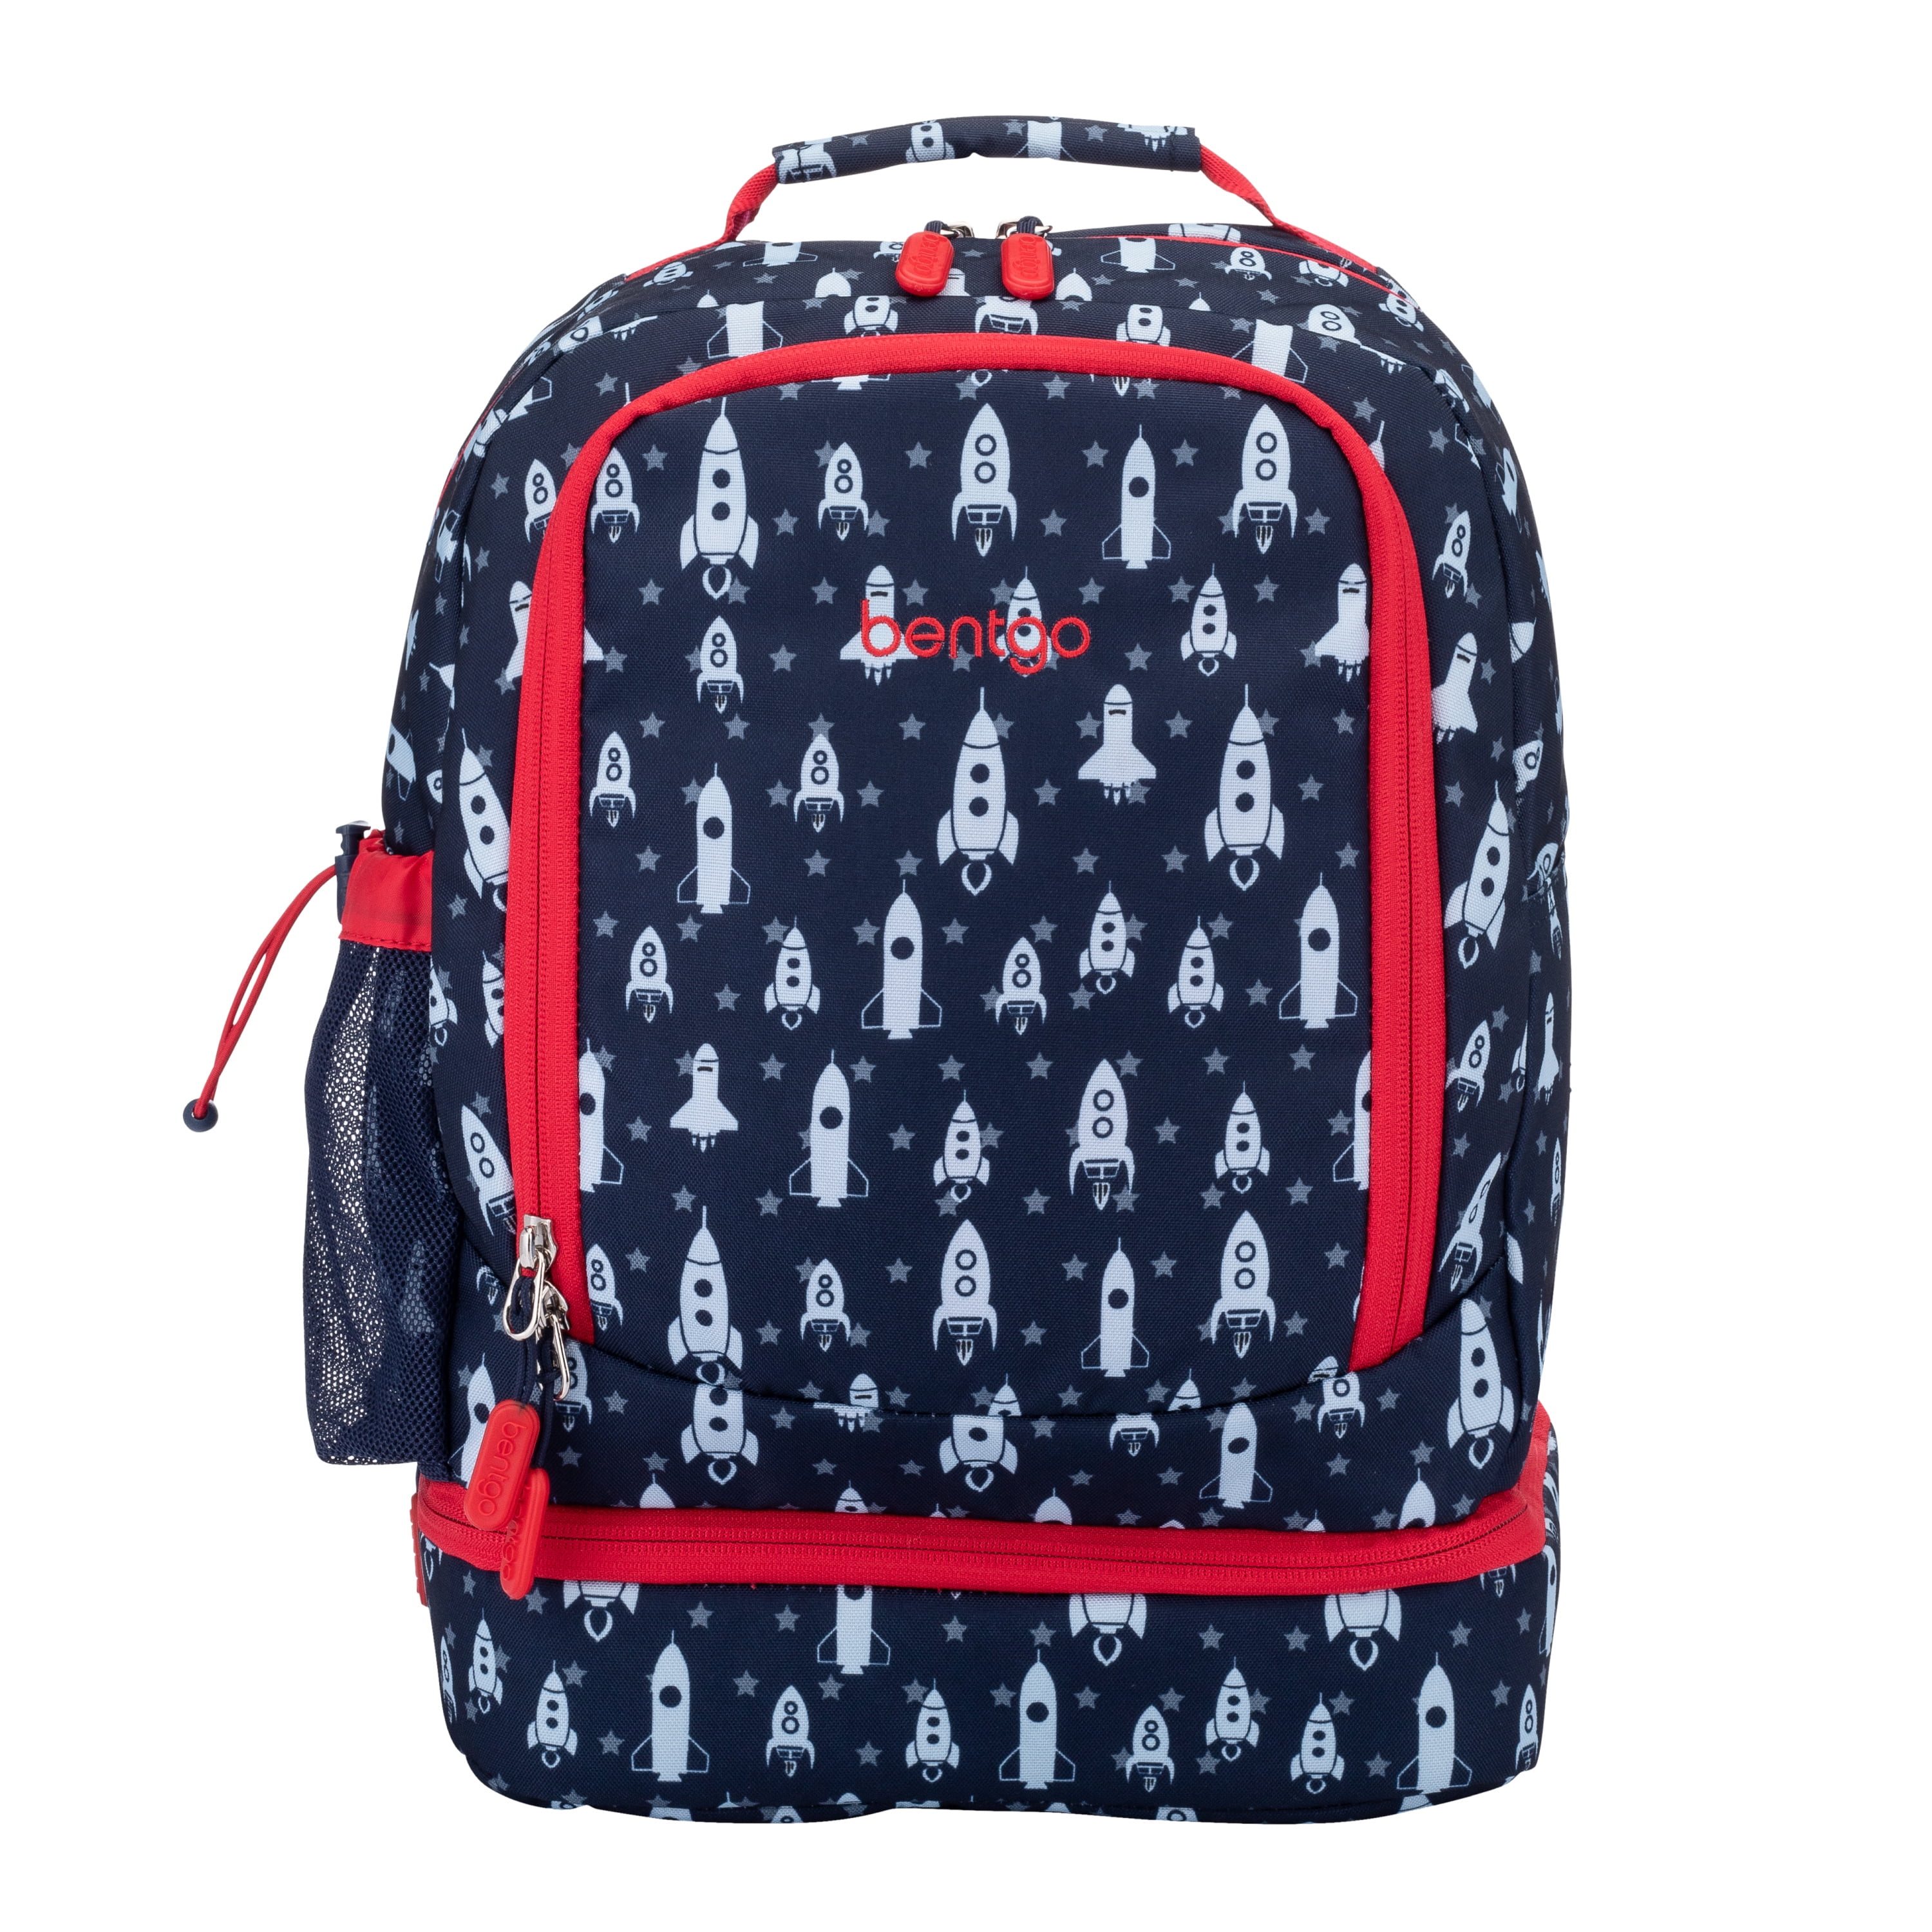 bentgo Kids Prints Sharks Backpack with Lunch Box, Blue (BGBKPAK-SHK)